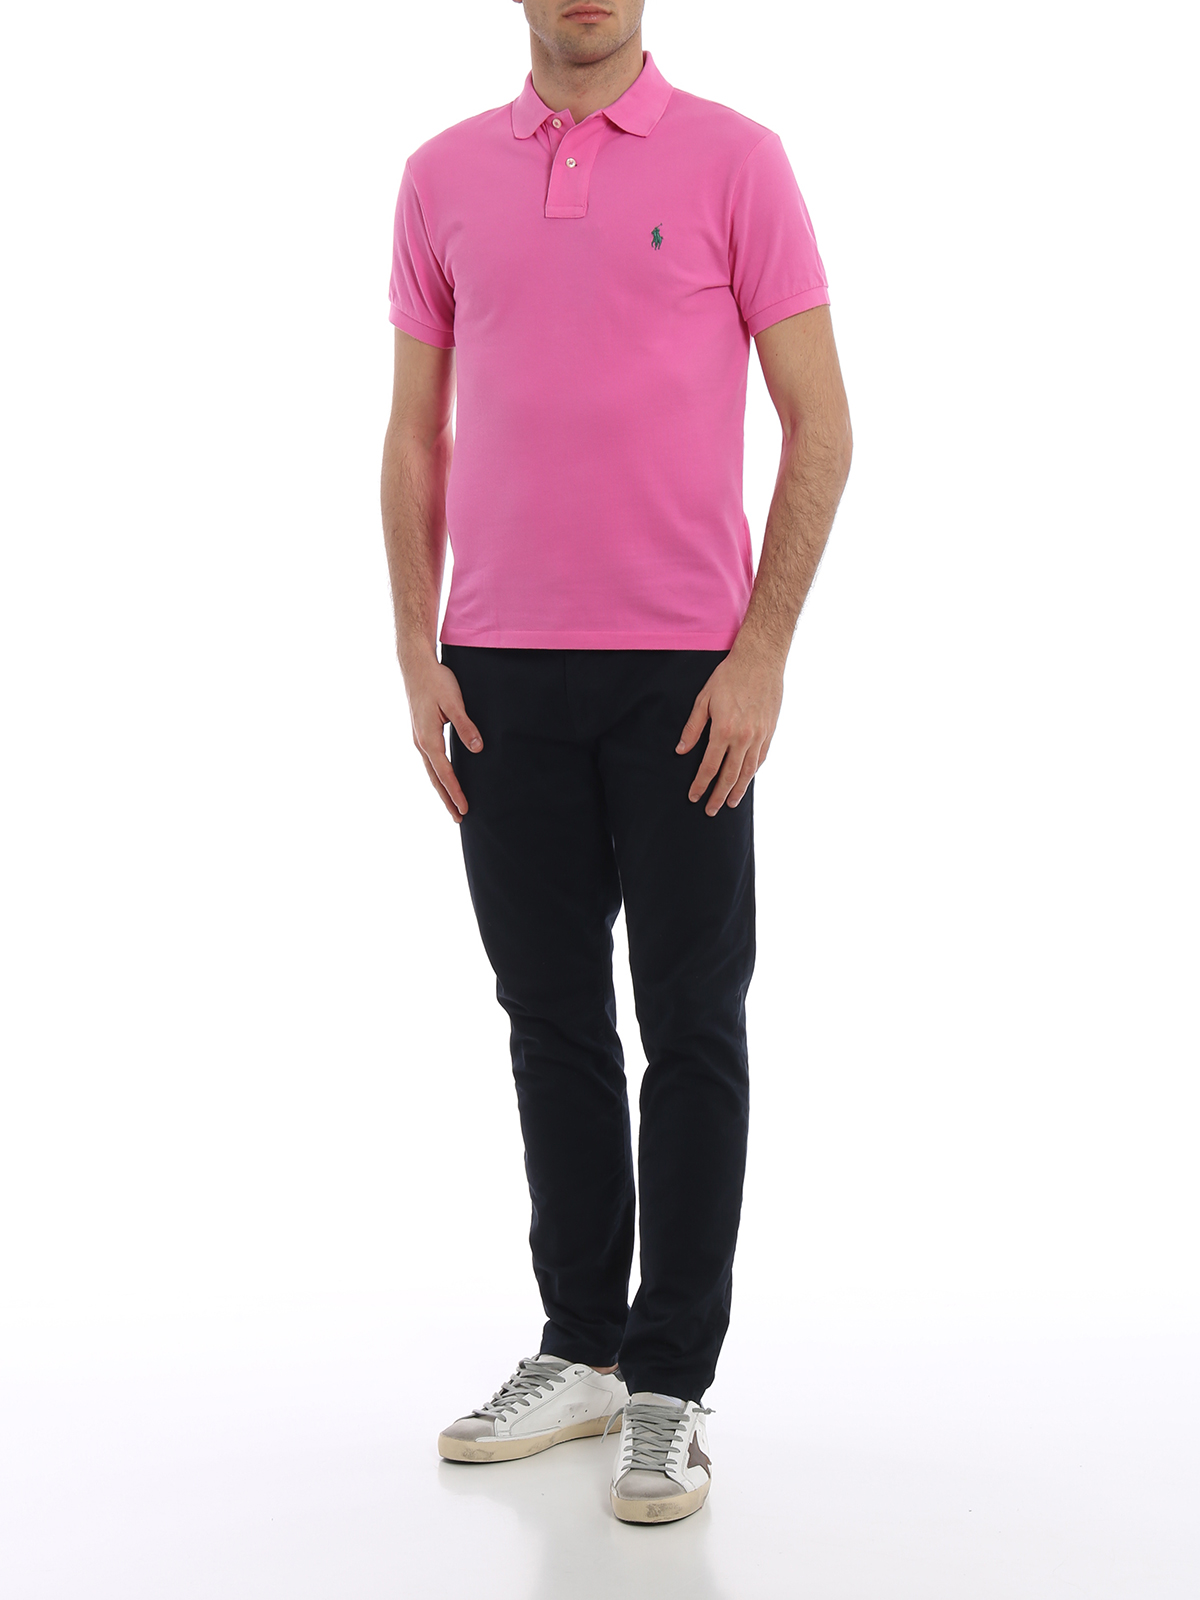 enthousiasme Jongleren Monnik Polo shirts Polo Ralph Lauren - Classic pink polo shirt in pique cotton -  710536856090